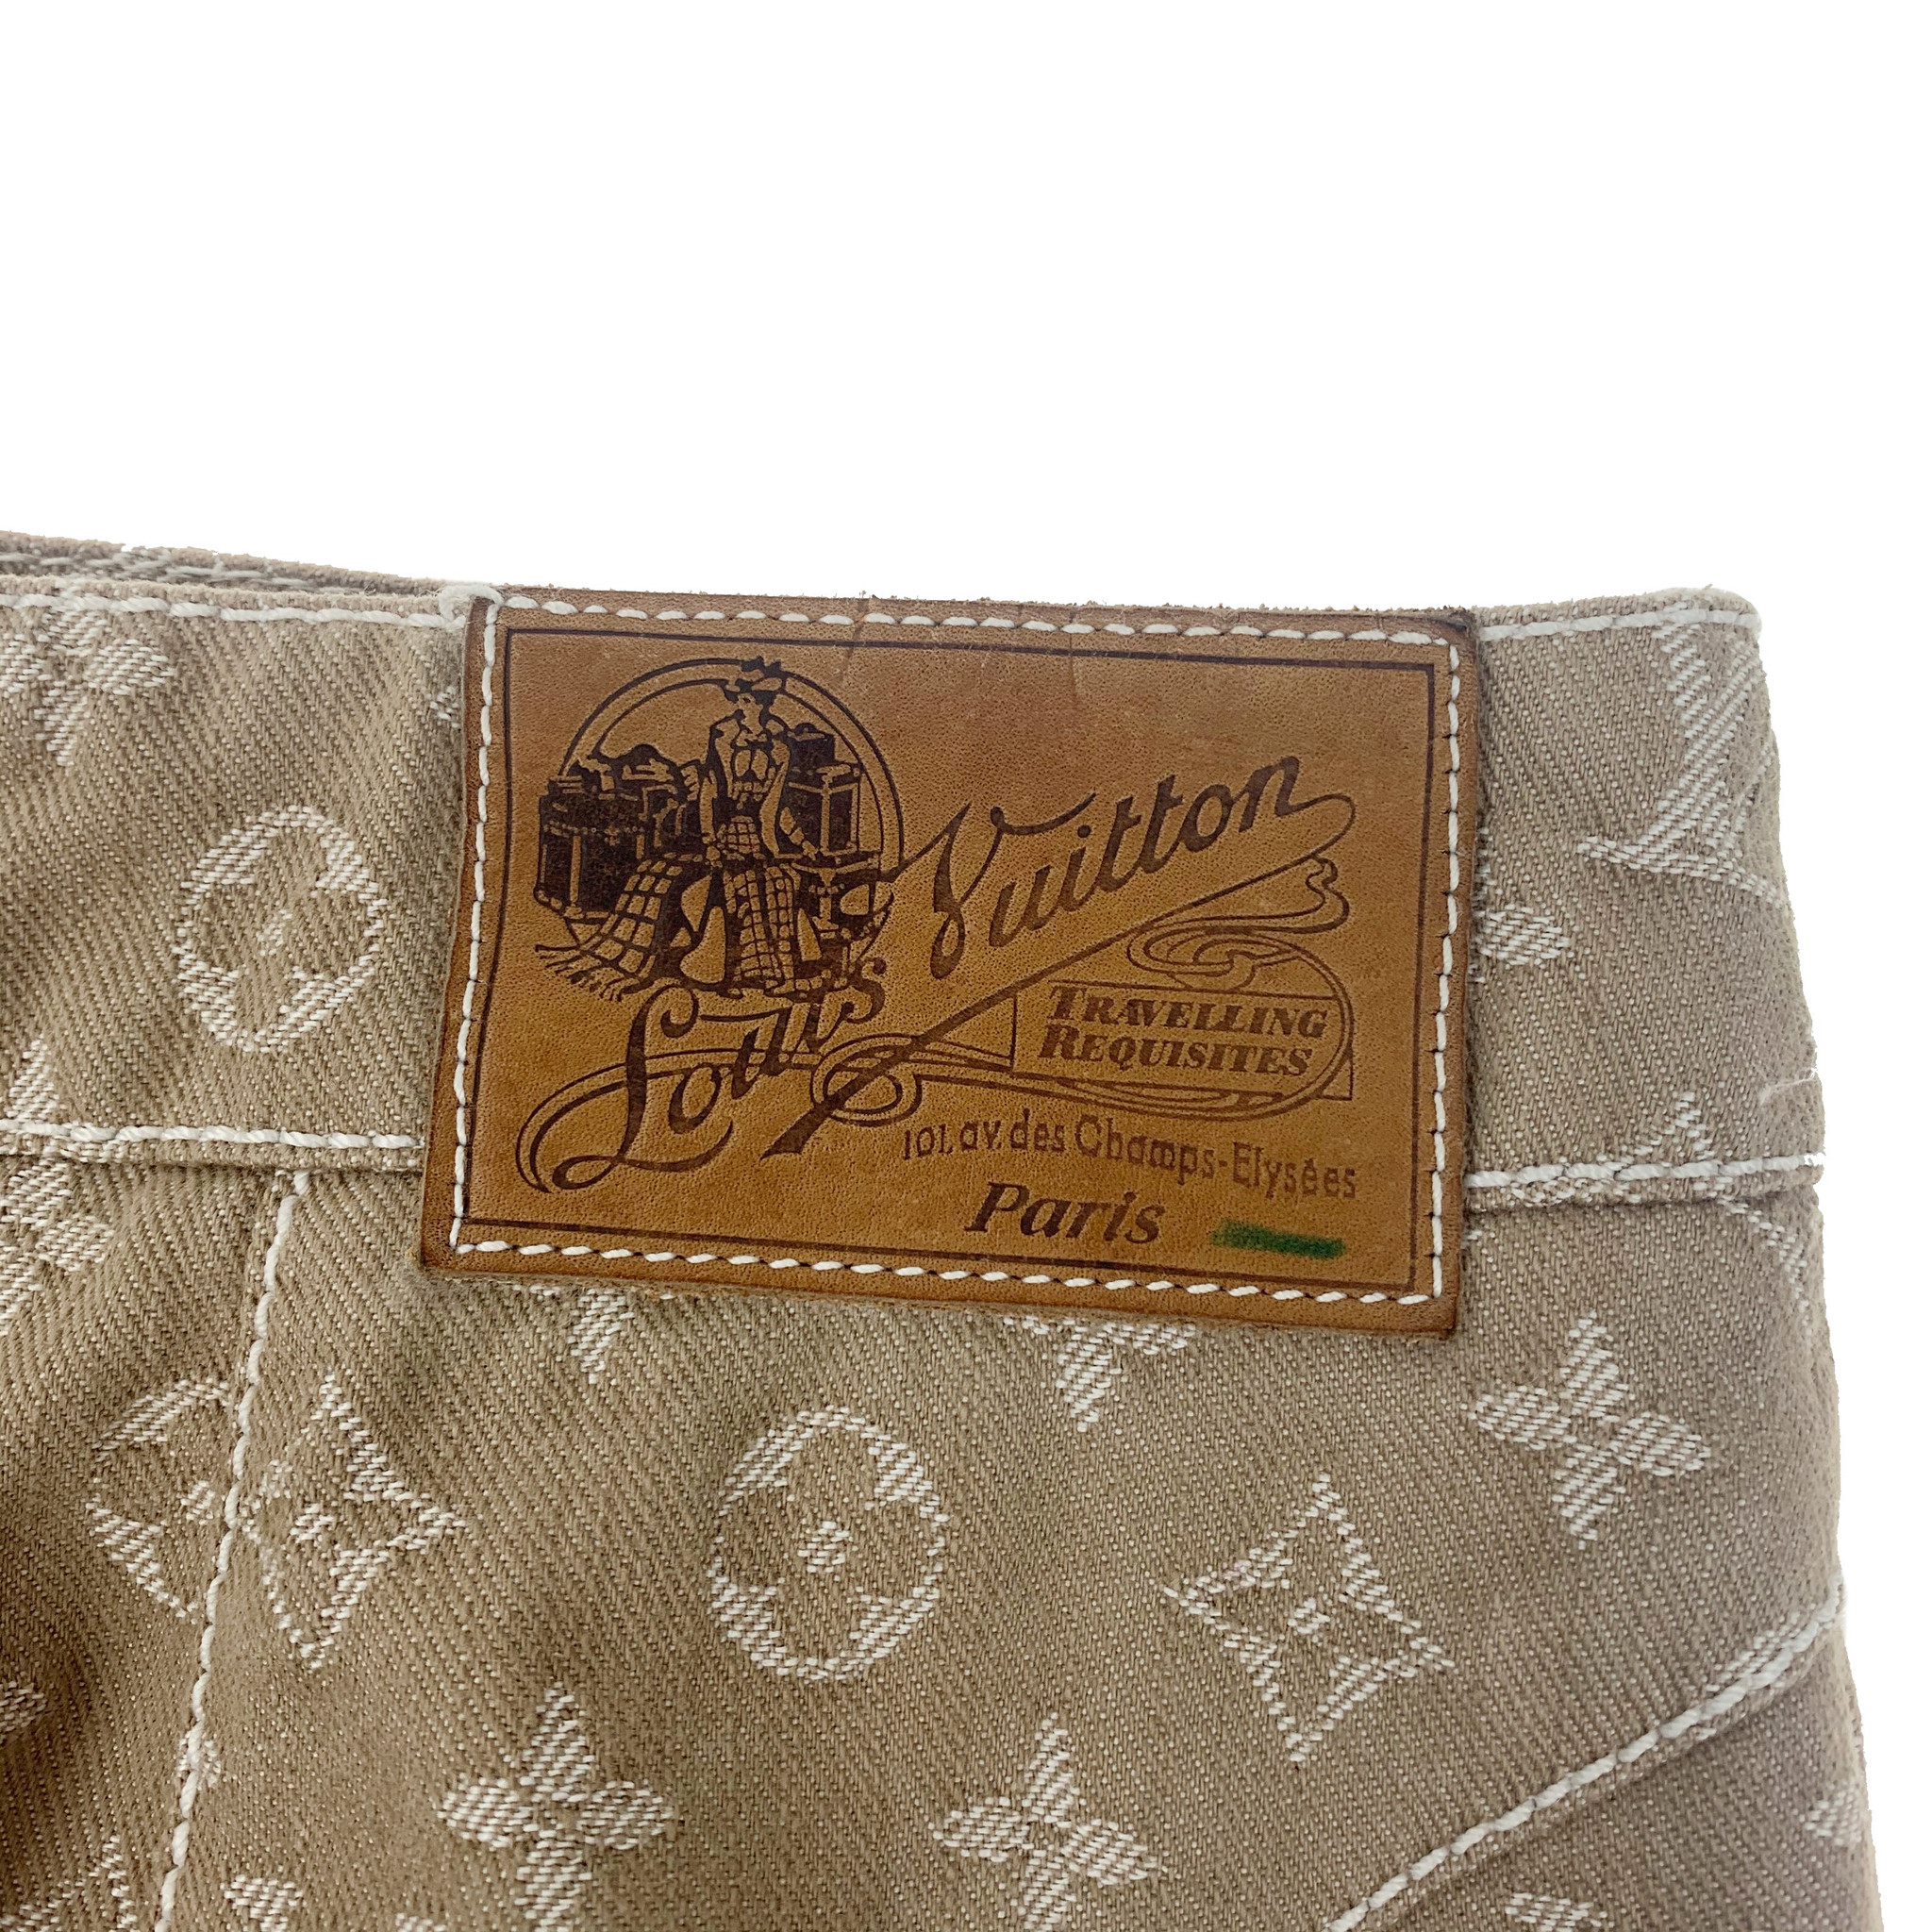 Louis Vuitton Embossed Monogram Jacket - Oliver's Archive